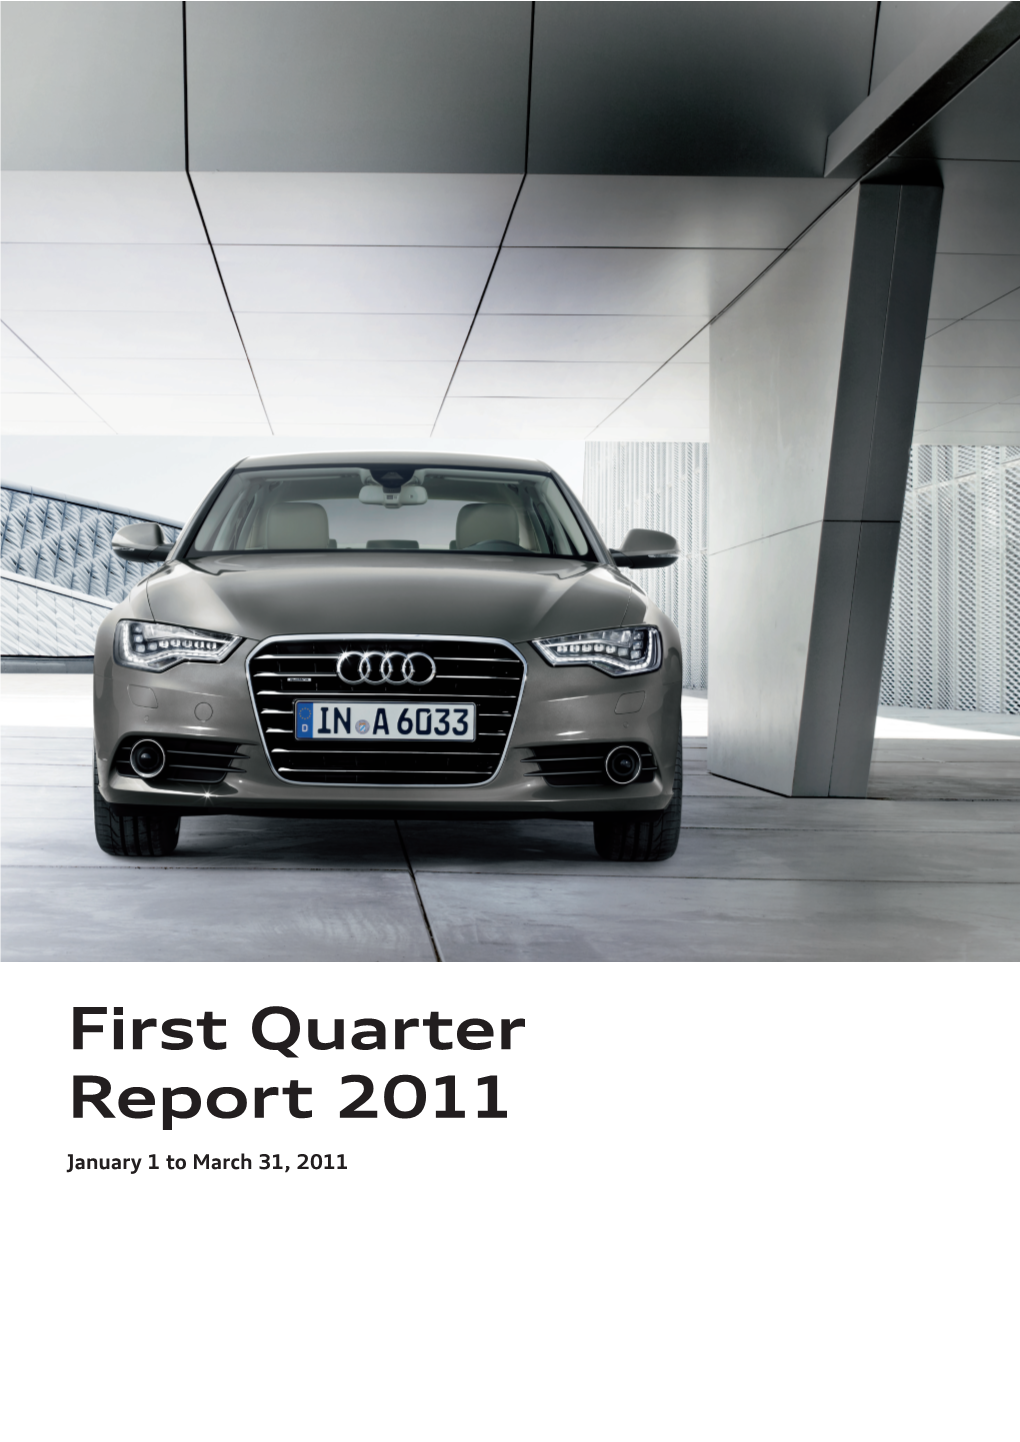 First Quarter Report 2011